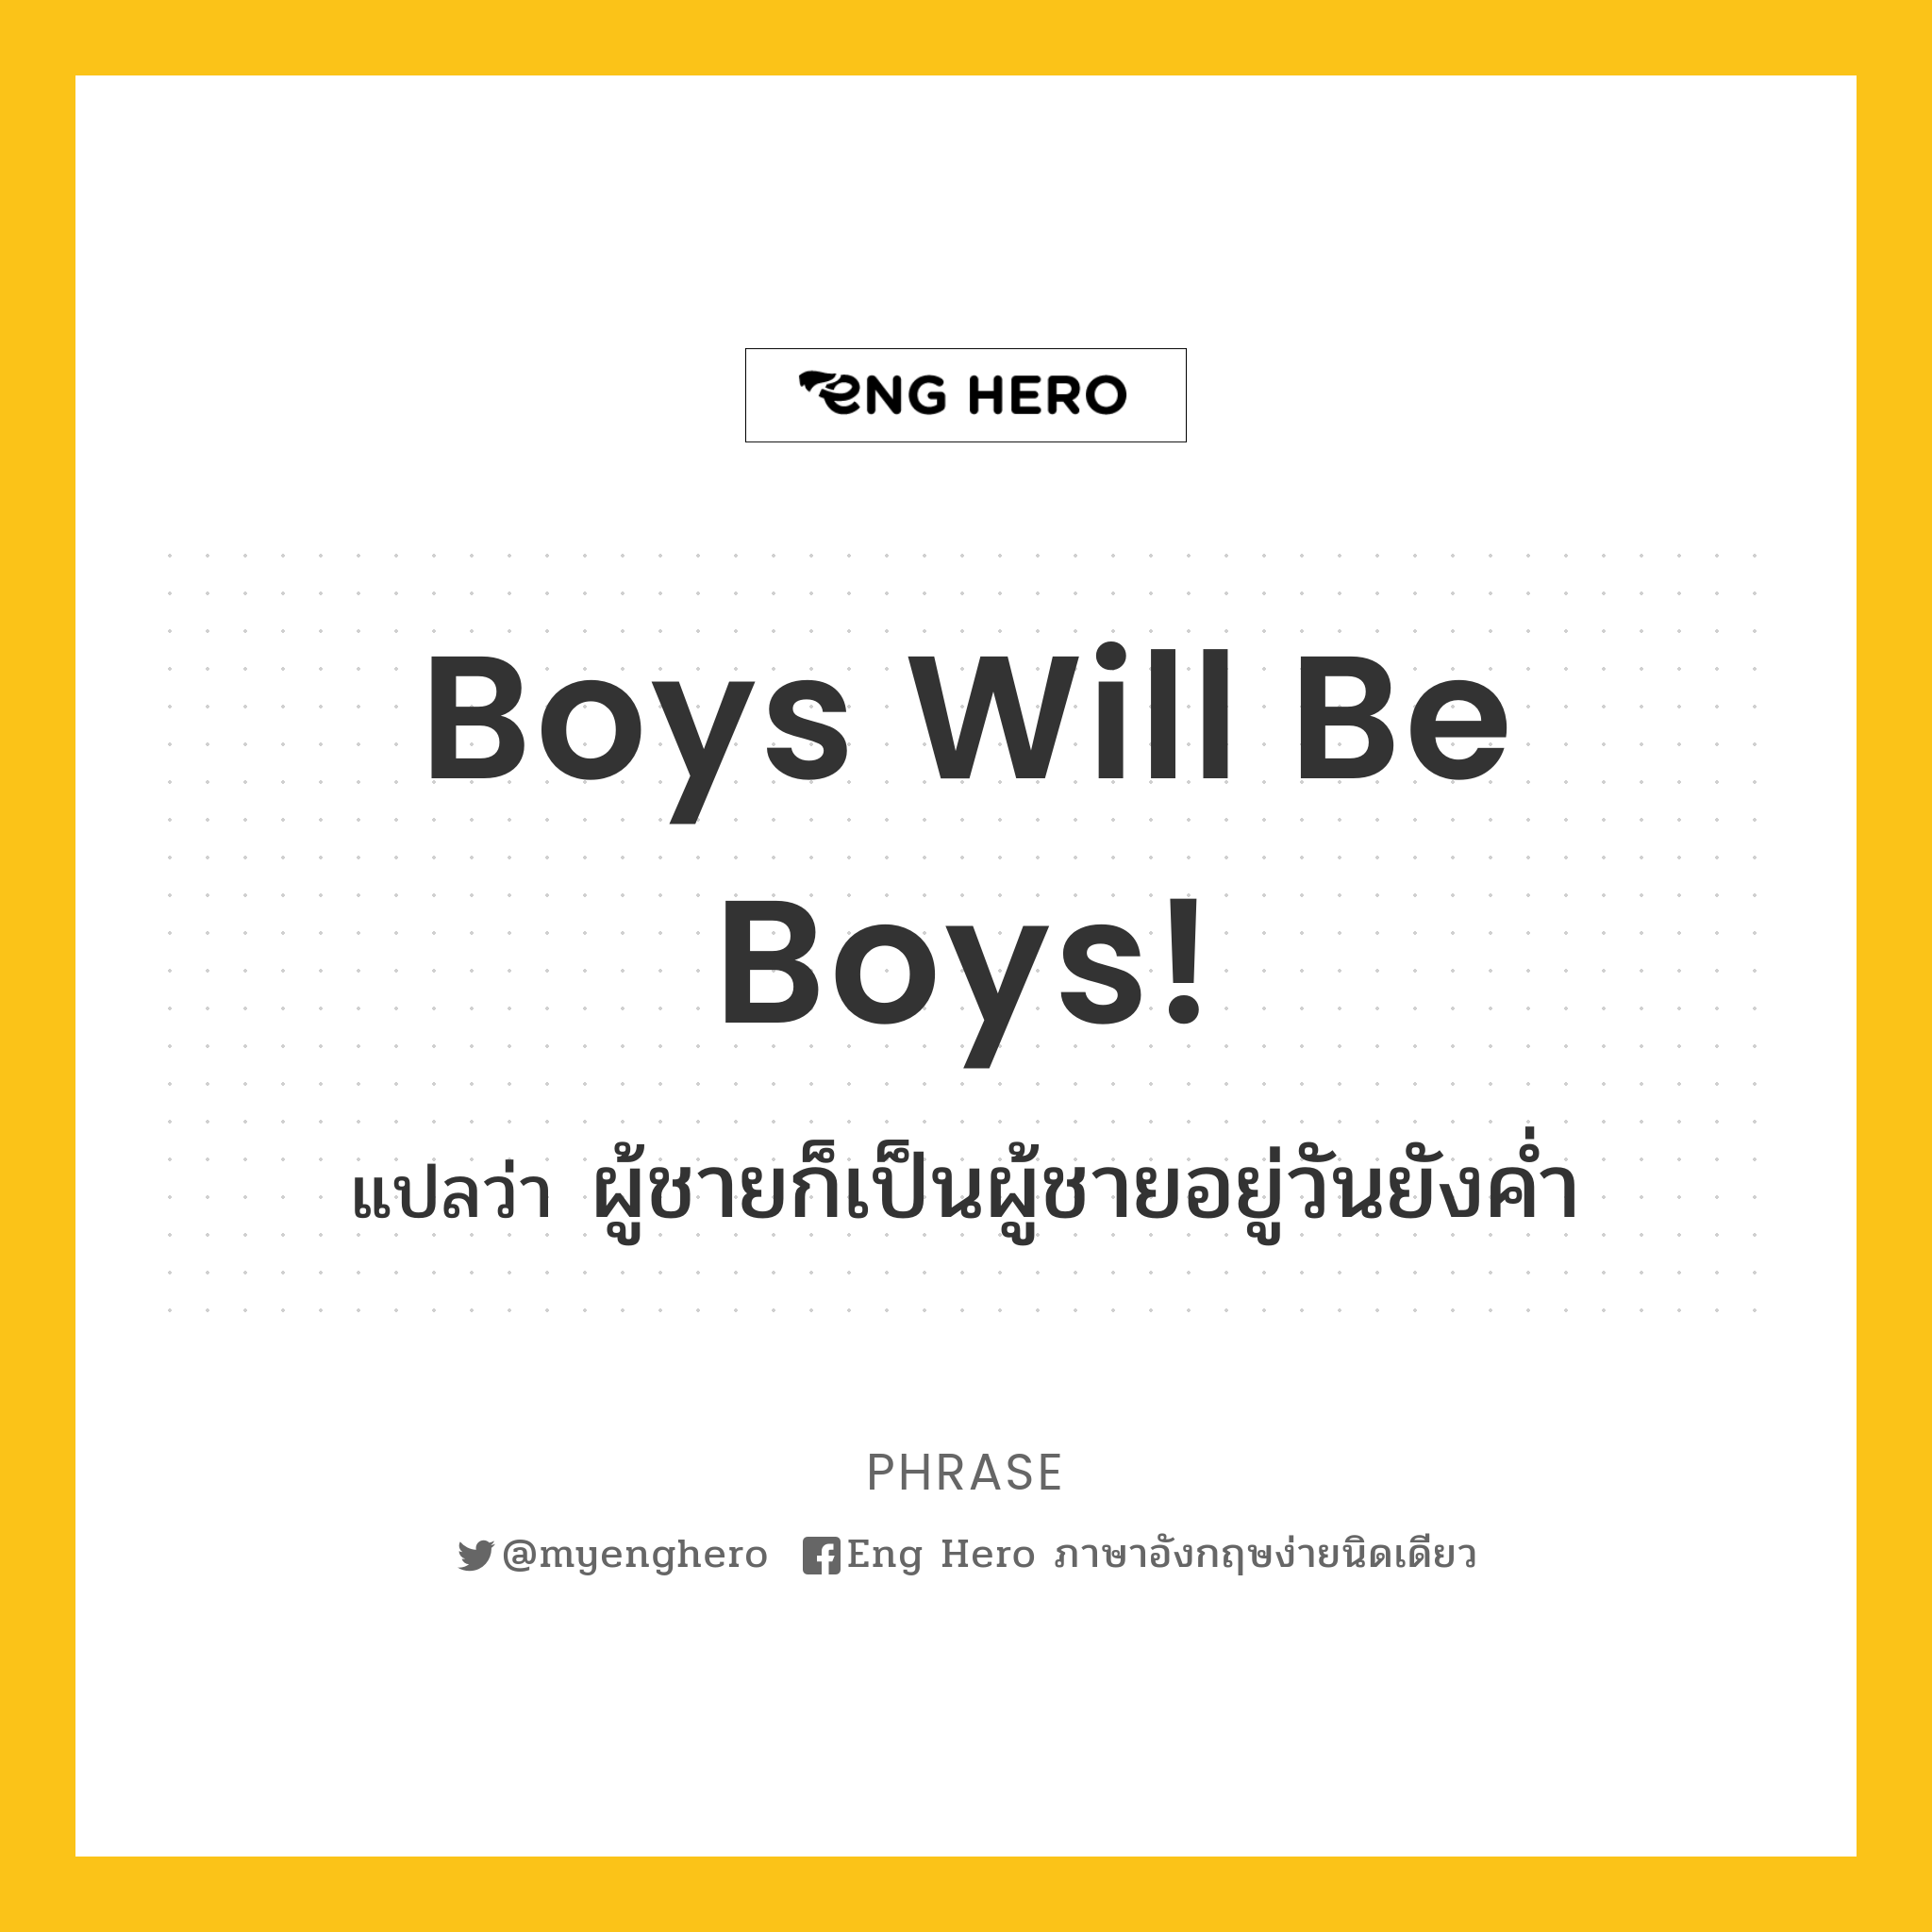 Boys will be boys!